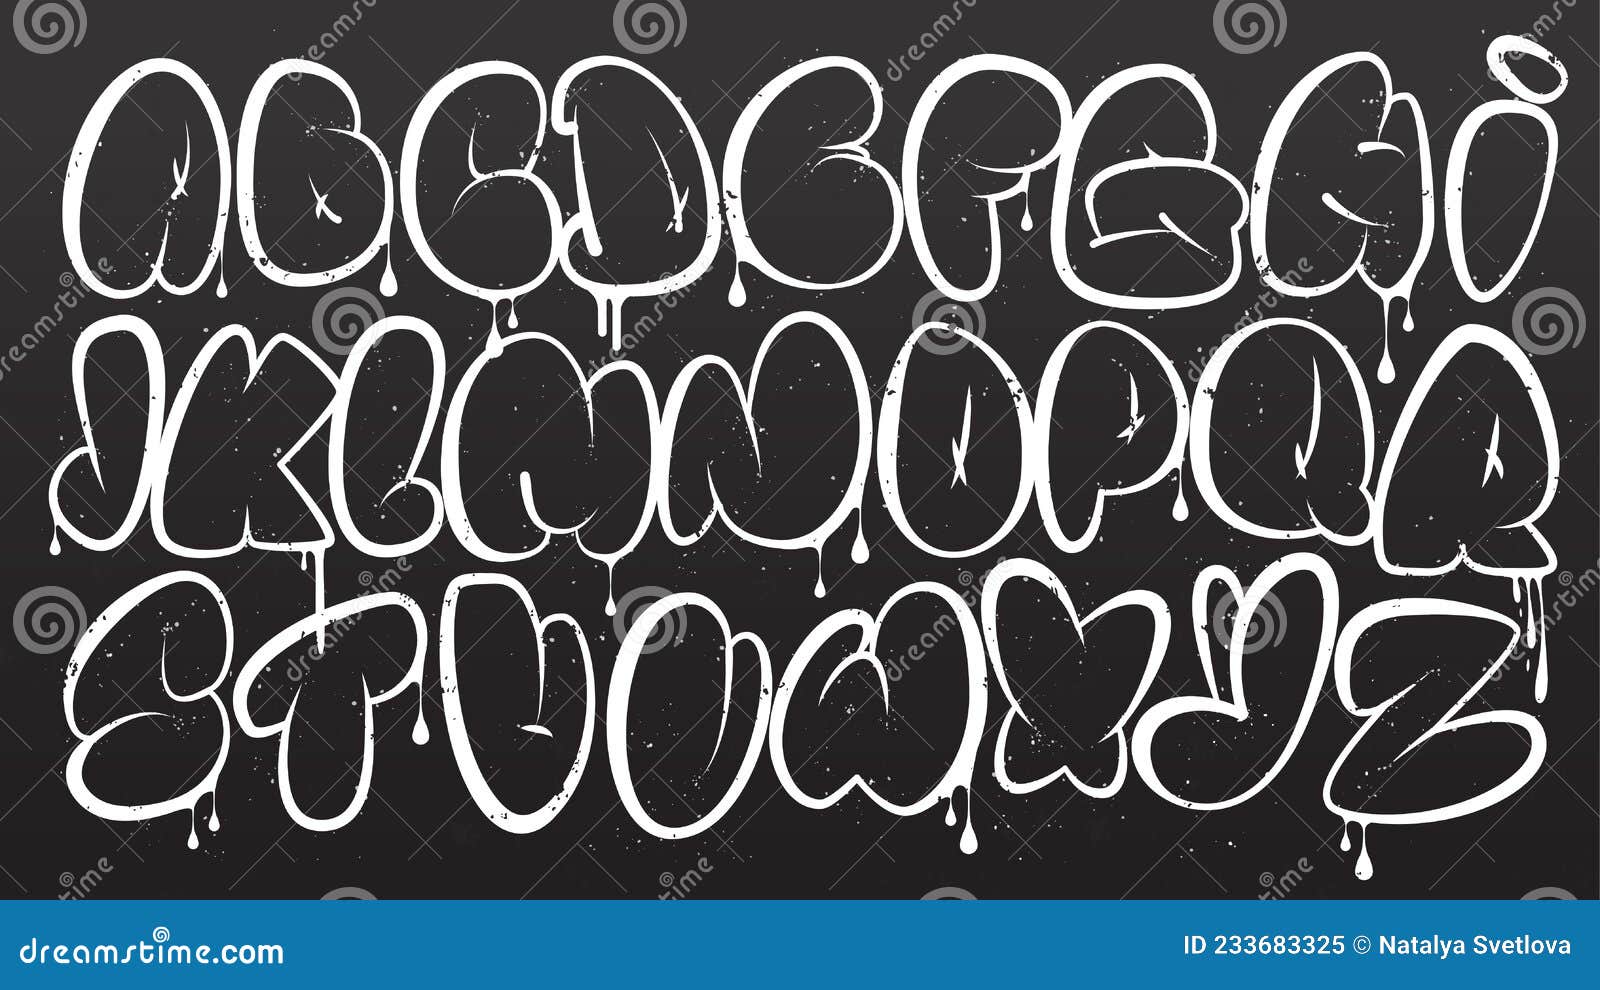 graffiti font bubble letters alphabet stock illustrations 124 graffiti font bubble letters alphabet stock illustrations vectors clipart dreamstime